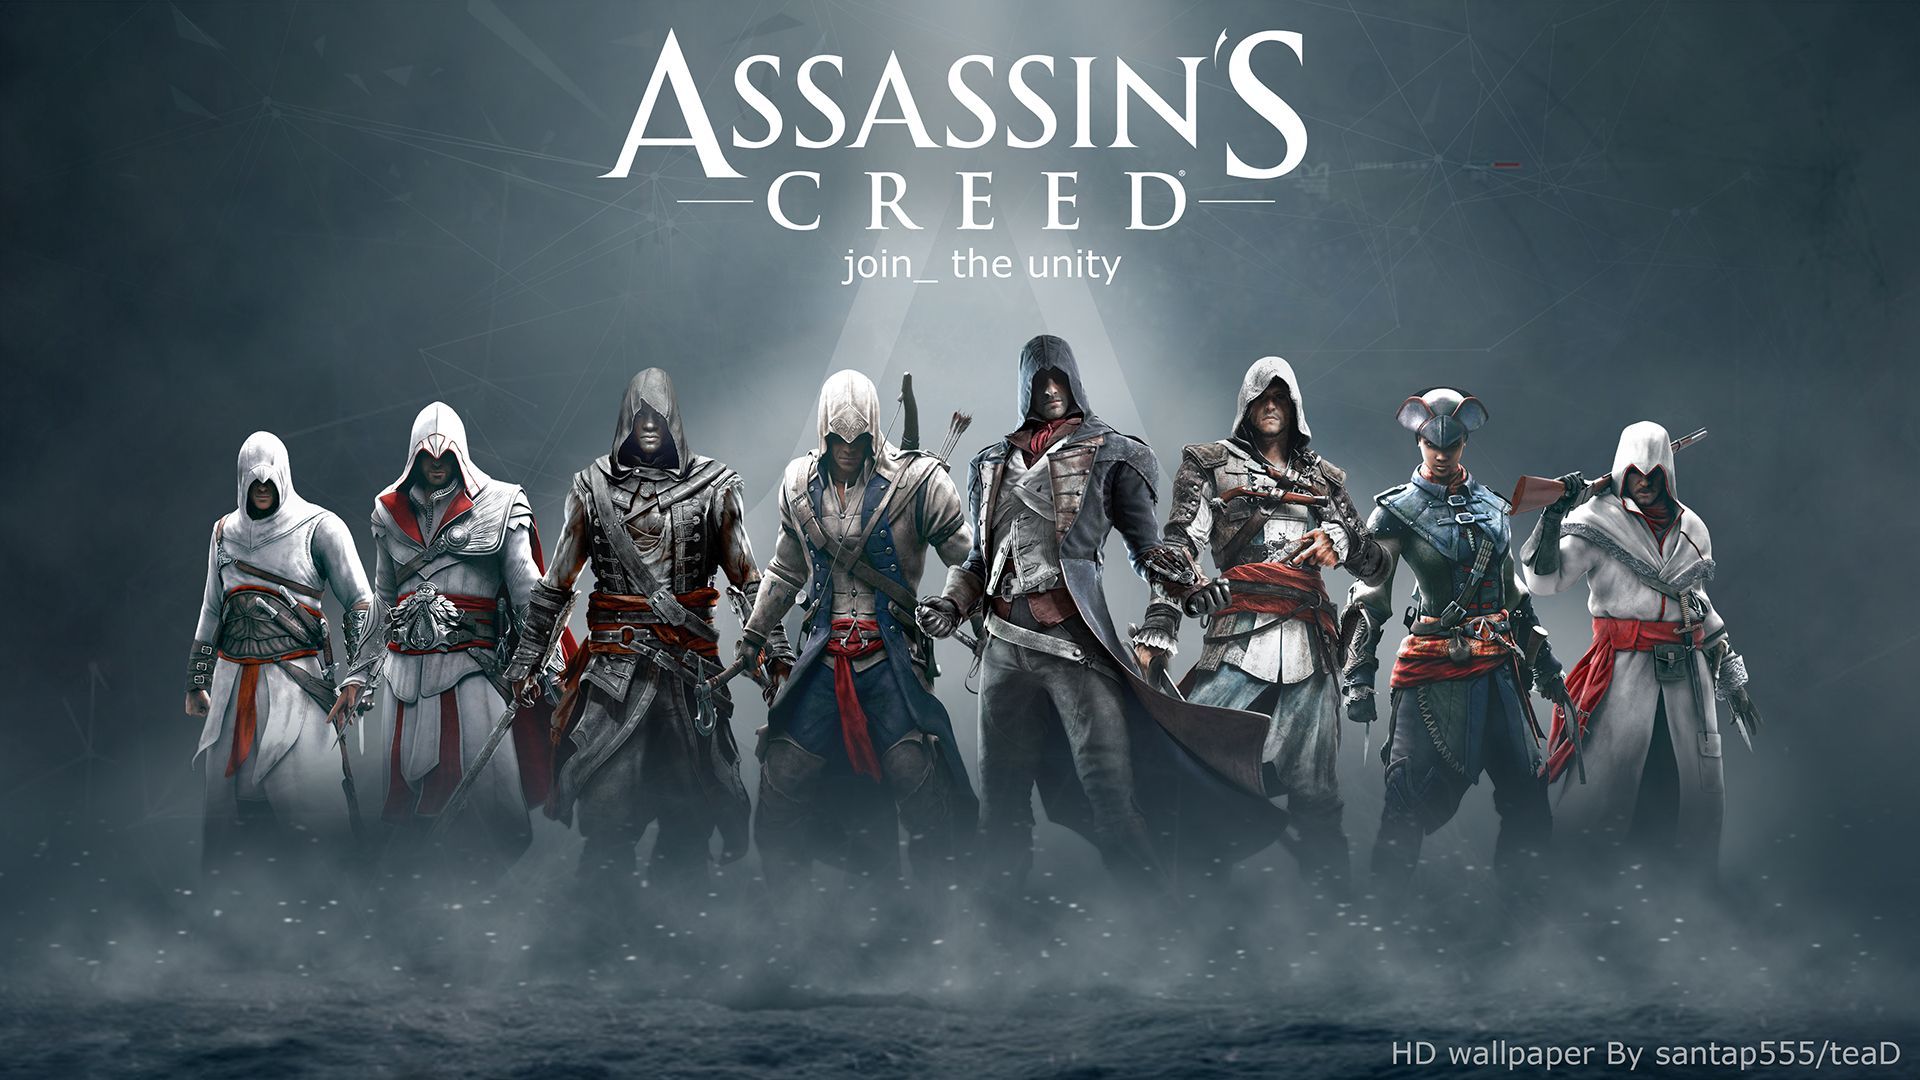 Assassins Creed HD wallpaper by teaD by santap555 on DeviantArt